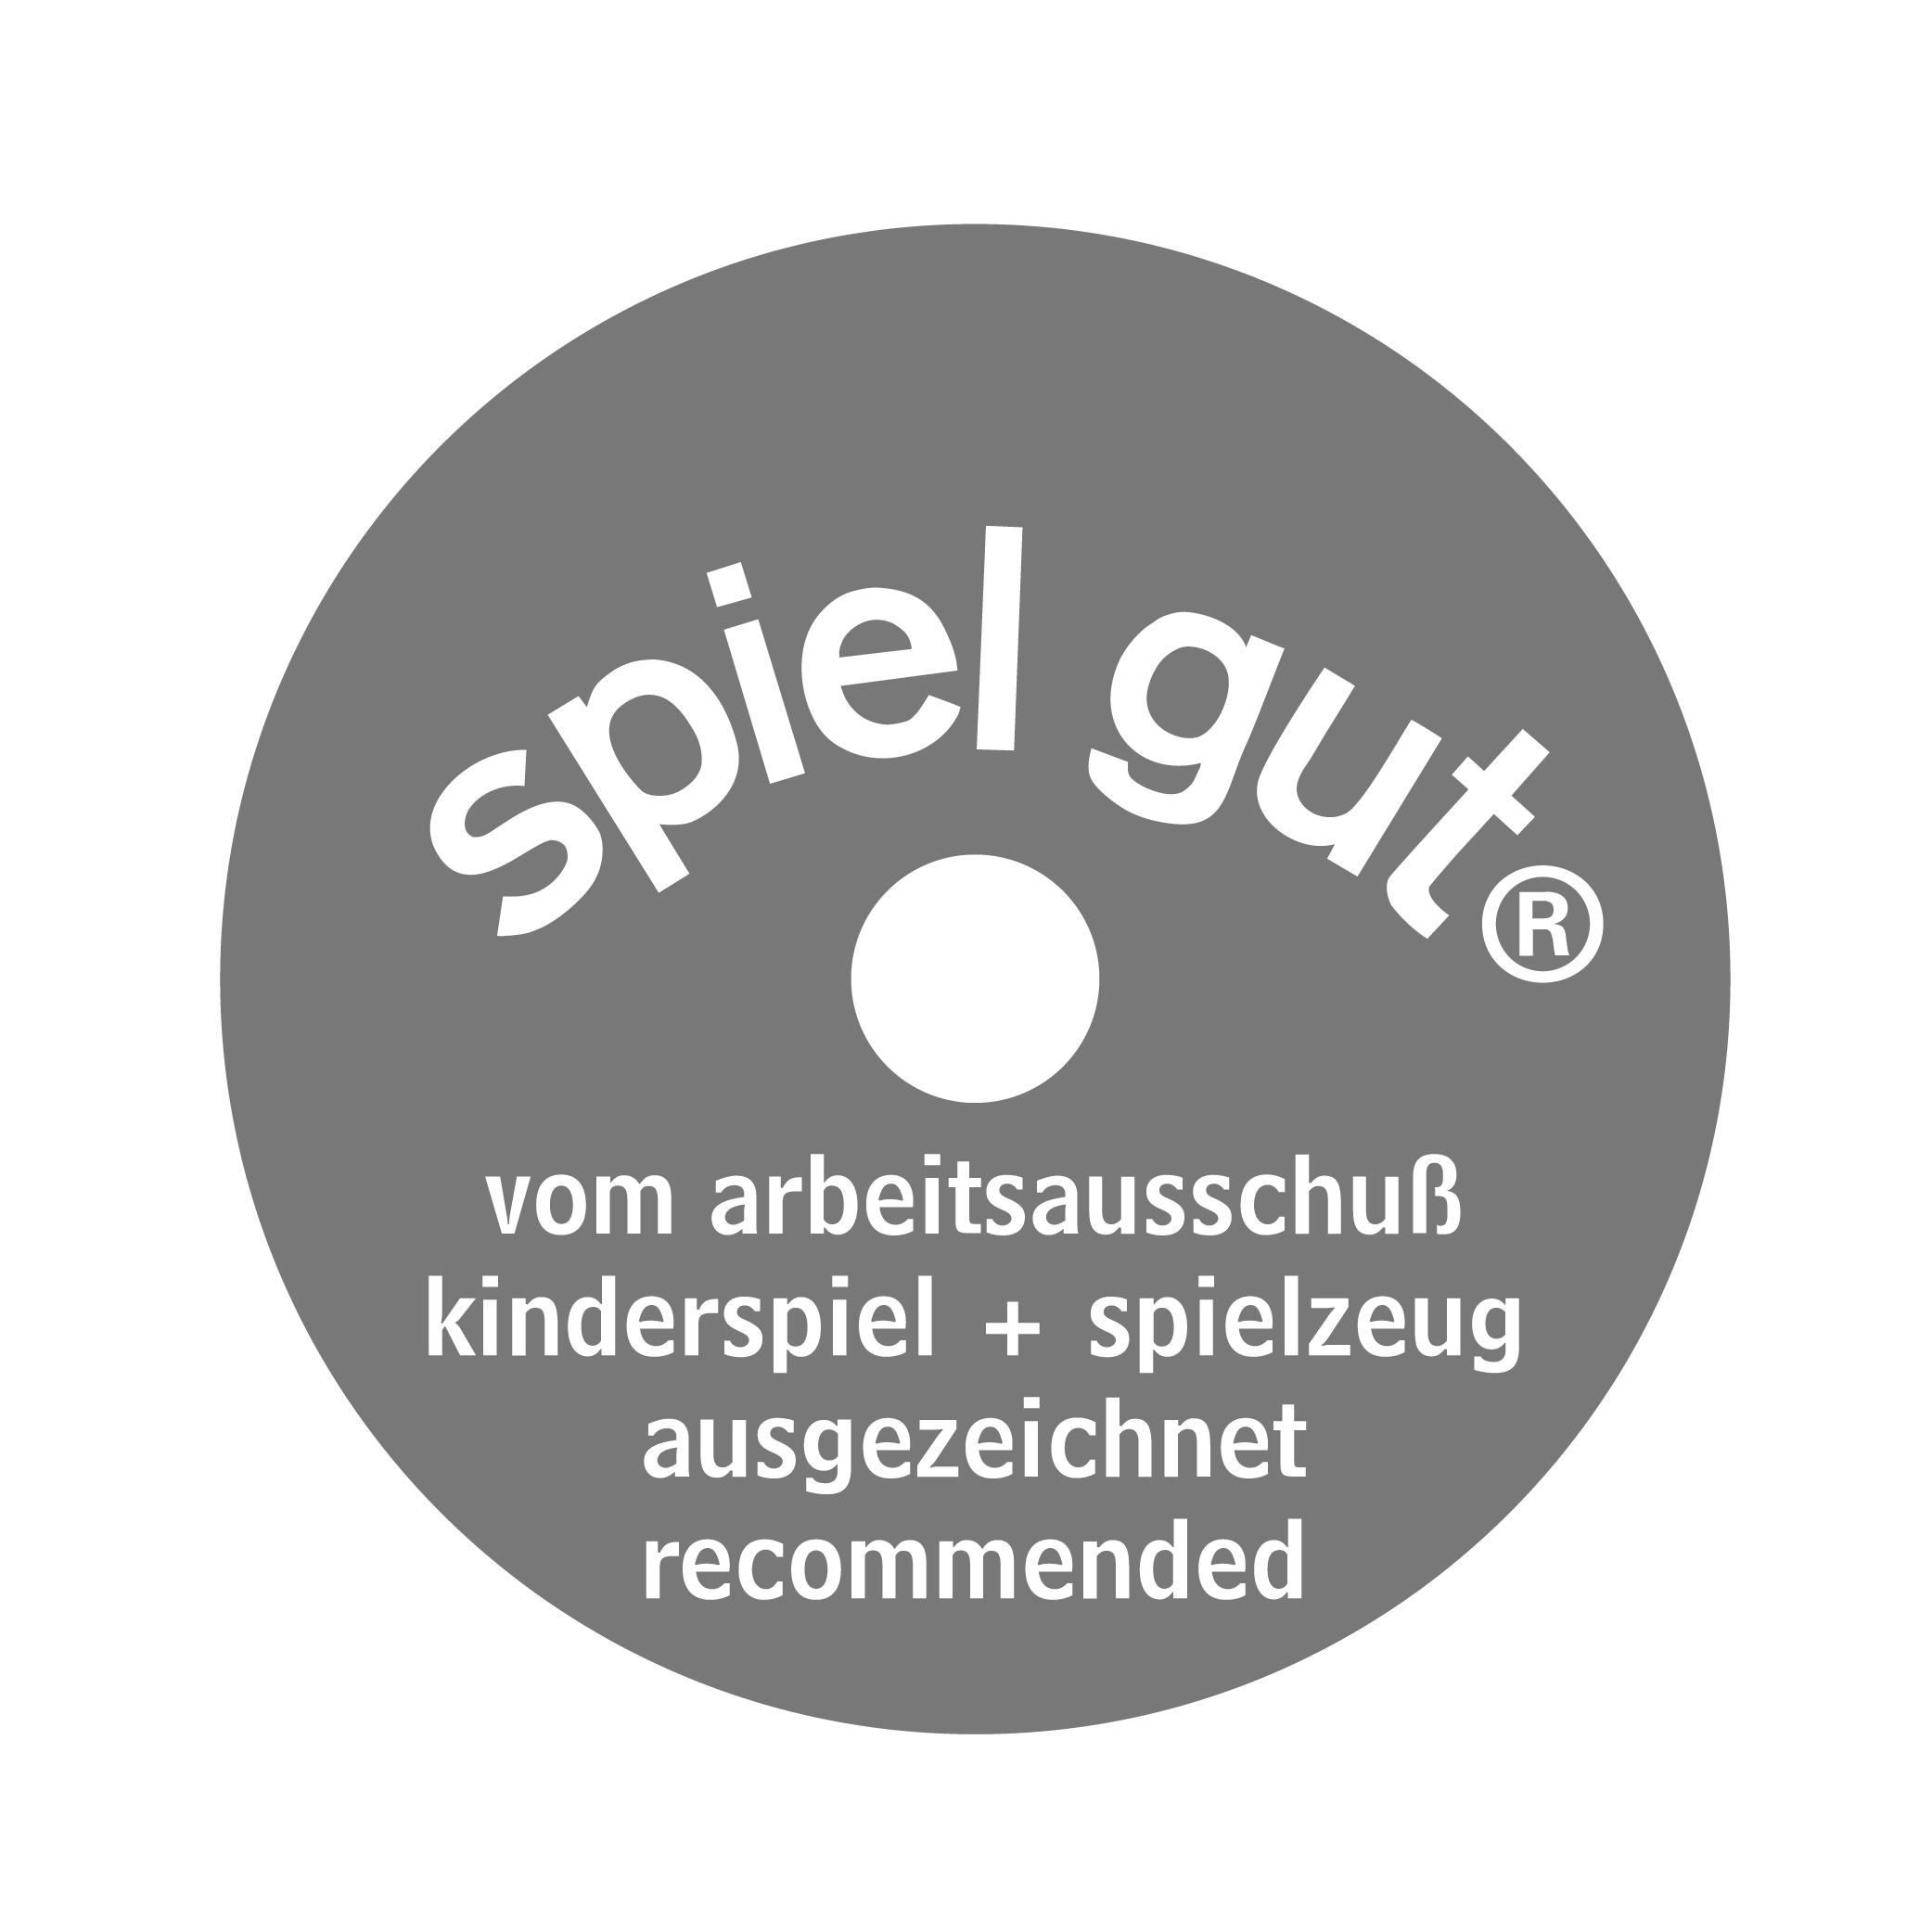 Spielgut award